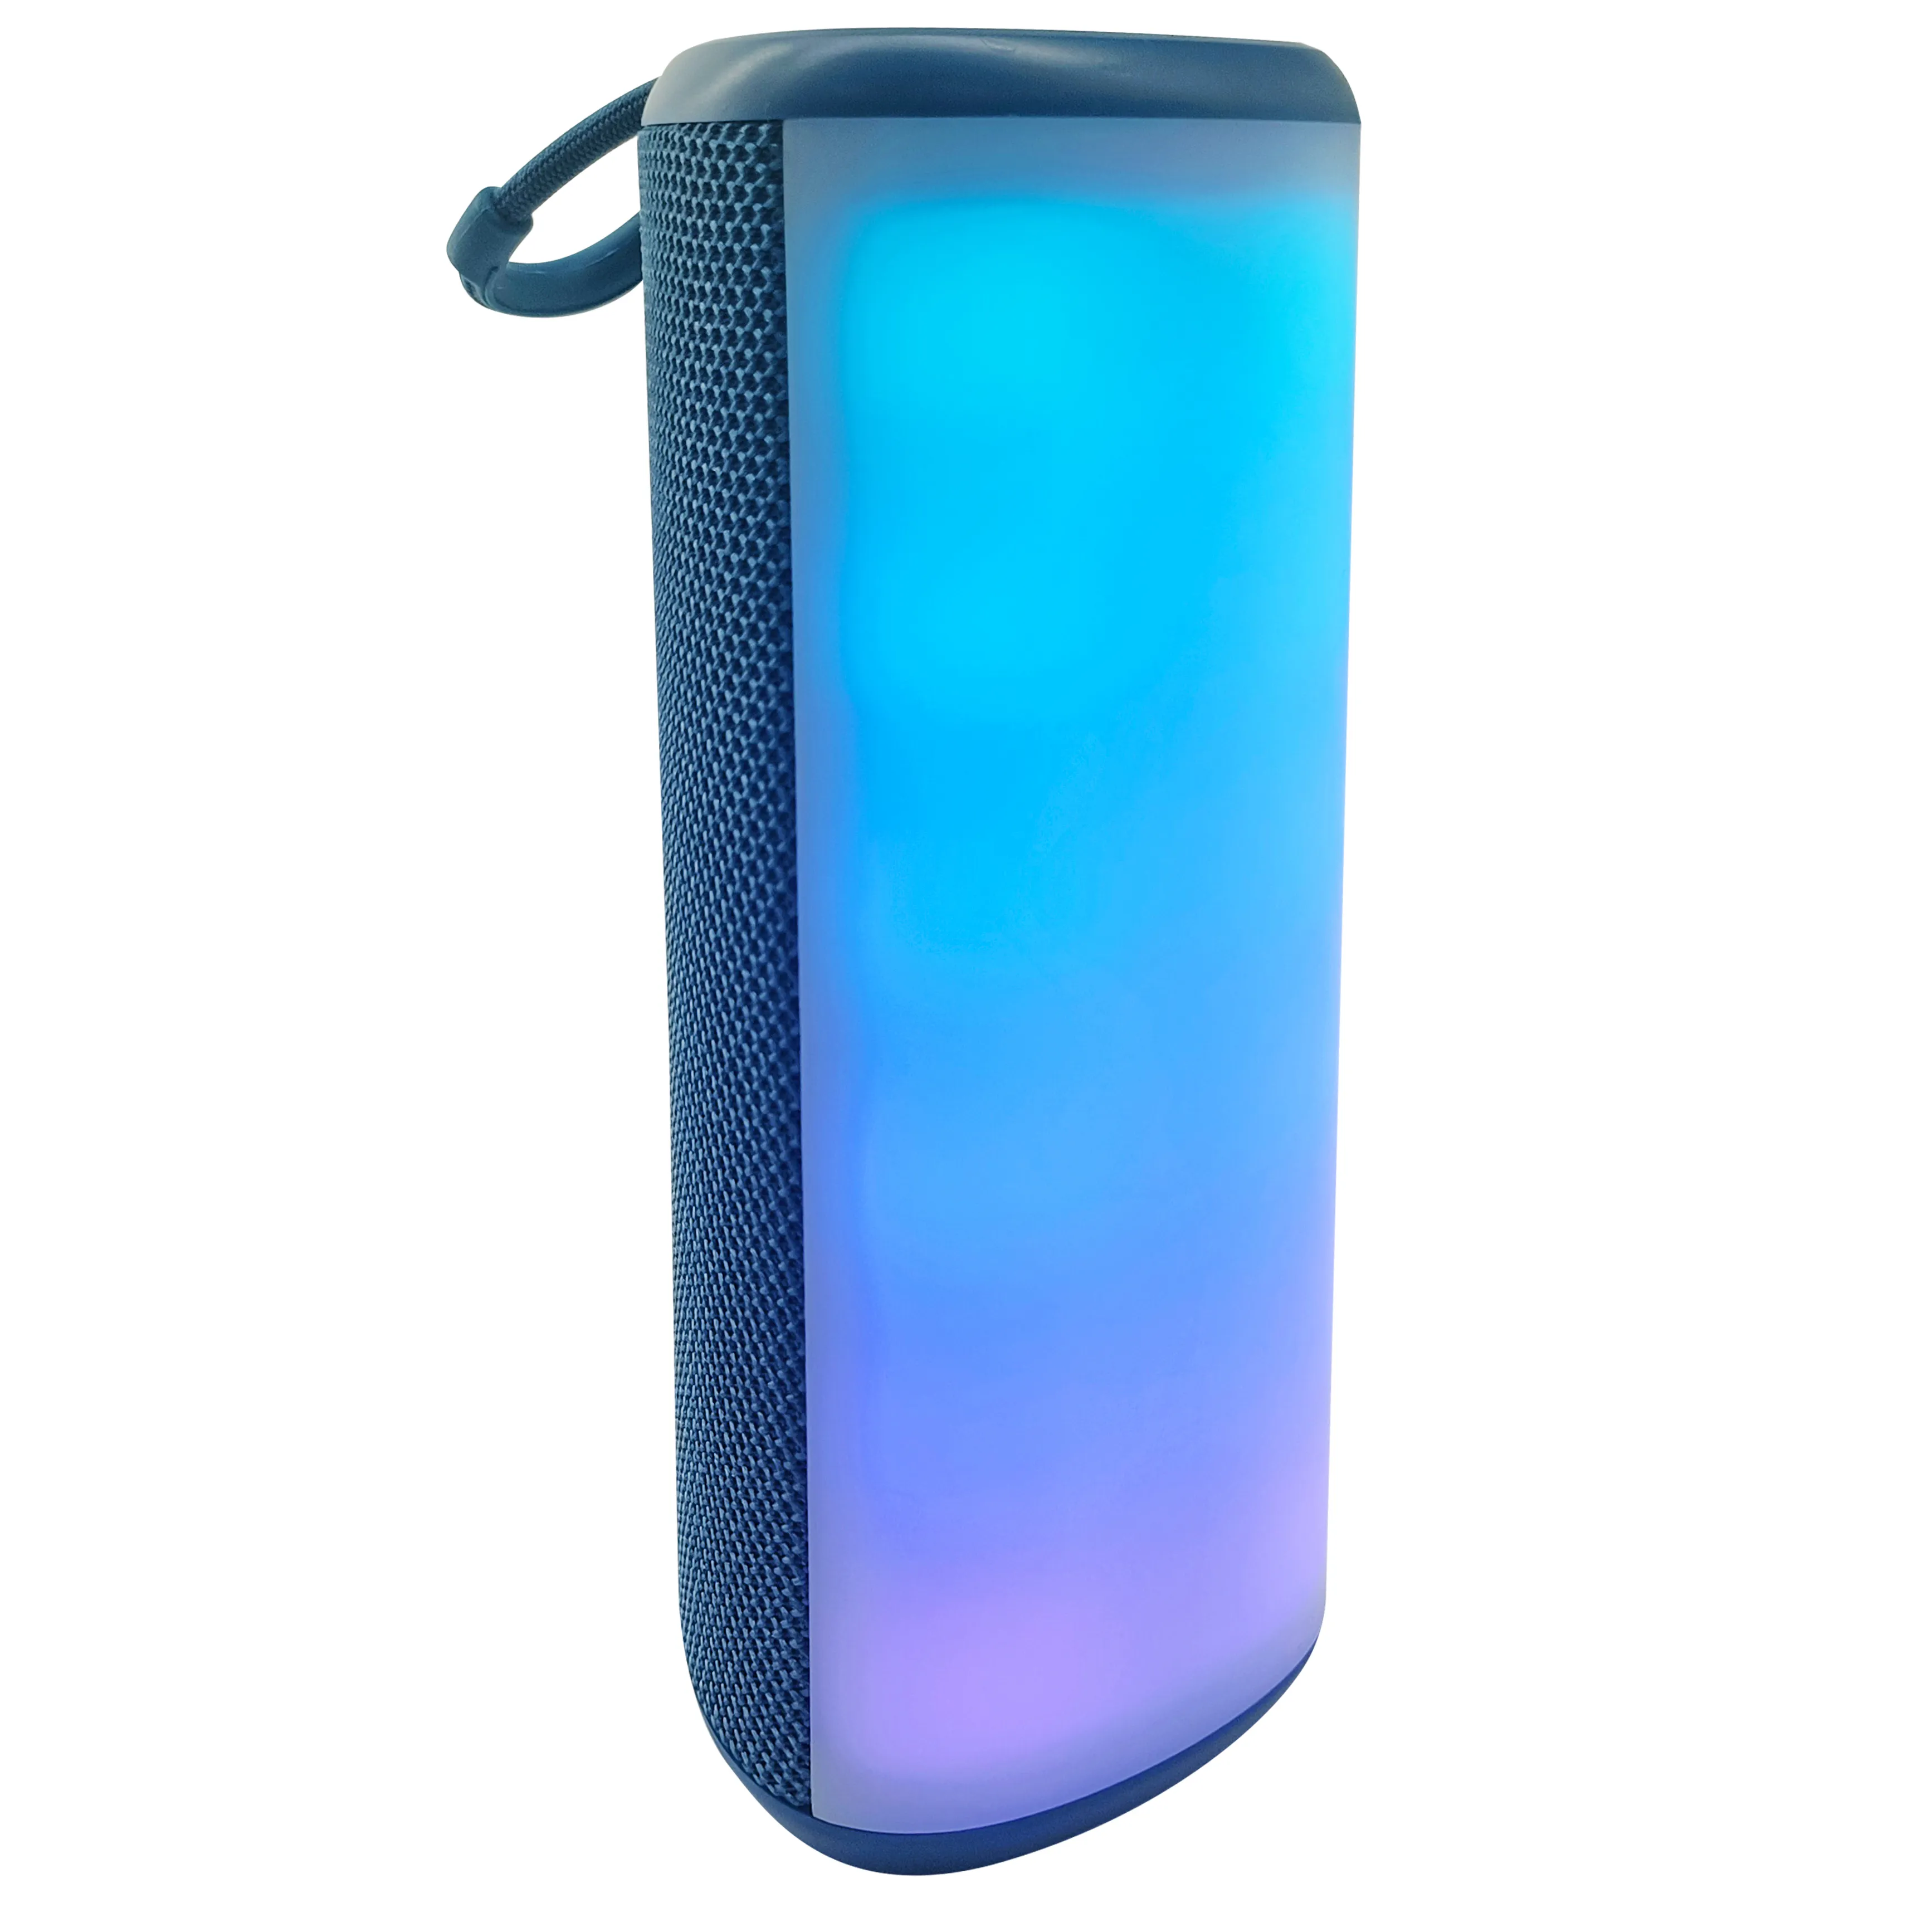 OEM Magic lights Portable Subwoofer Sound Bass Colorful Light Party Wireless Bt Speaker